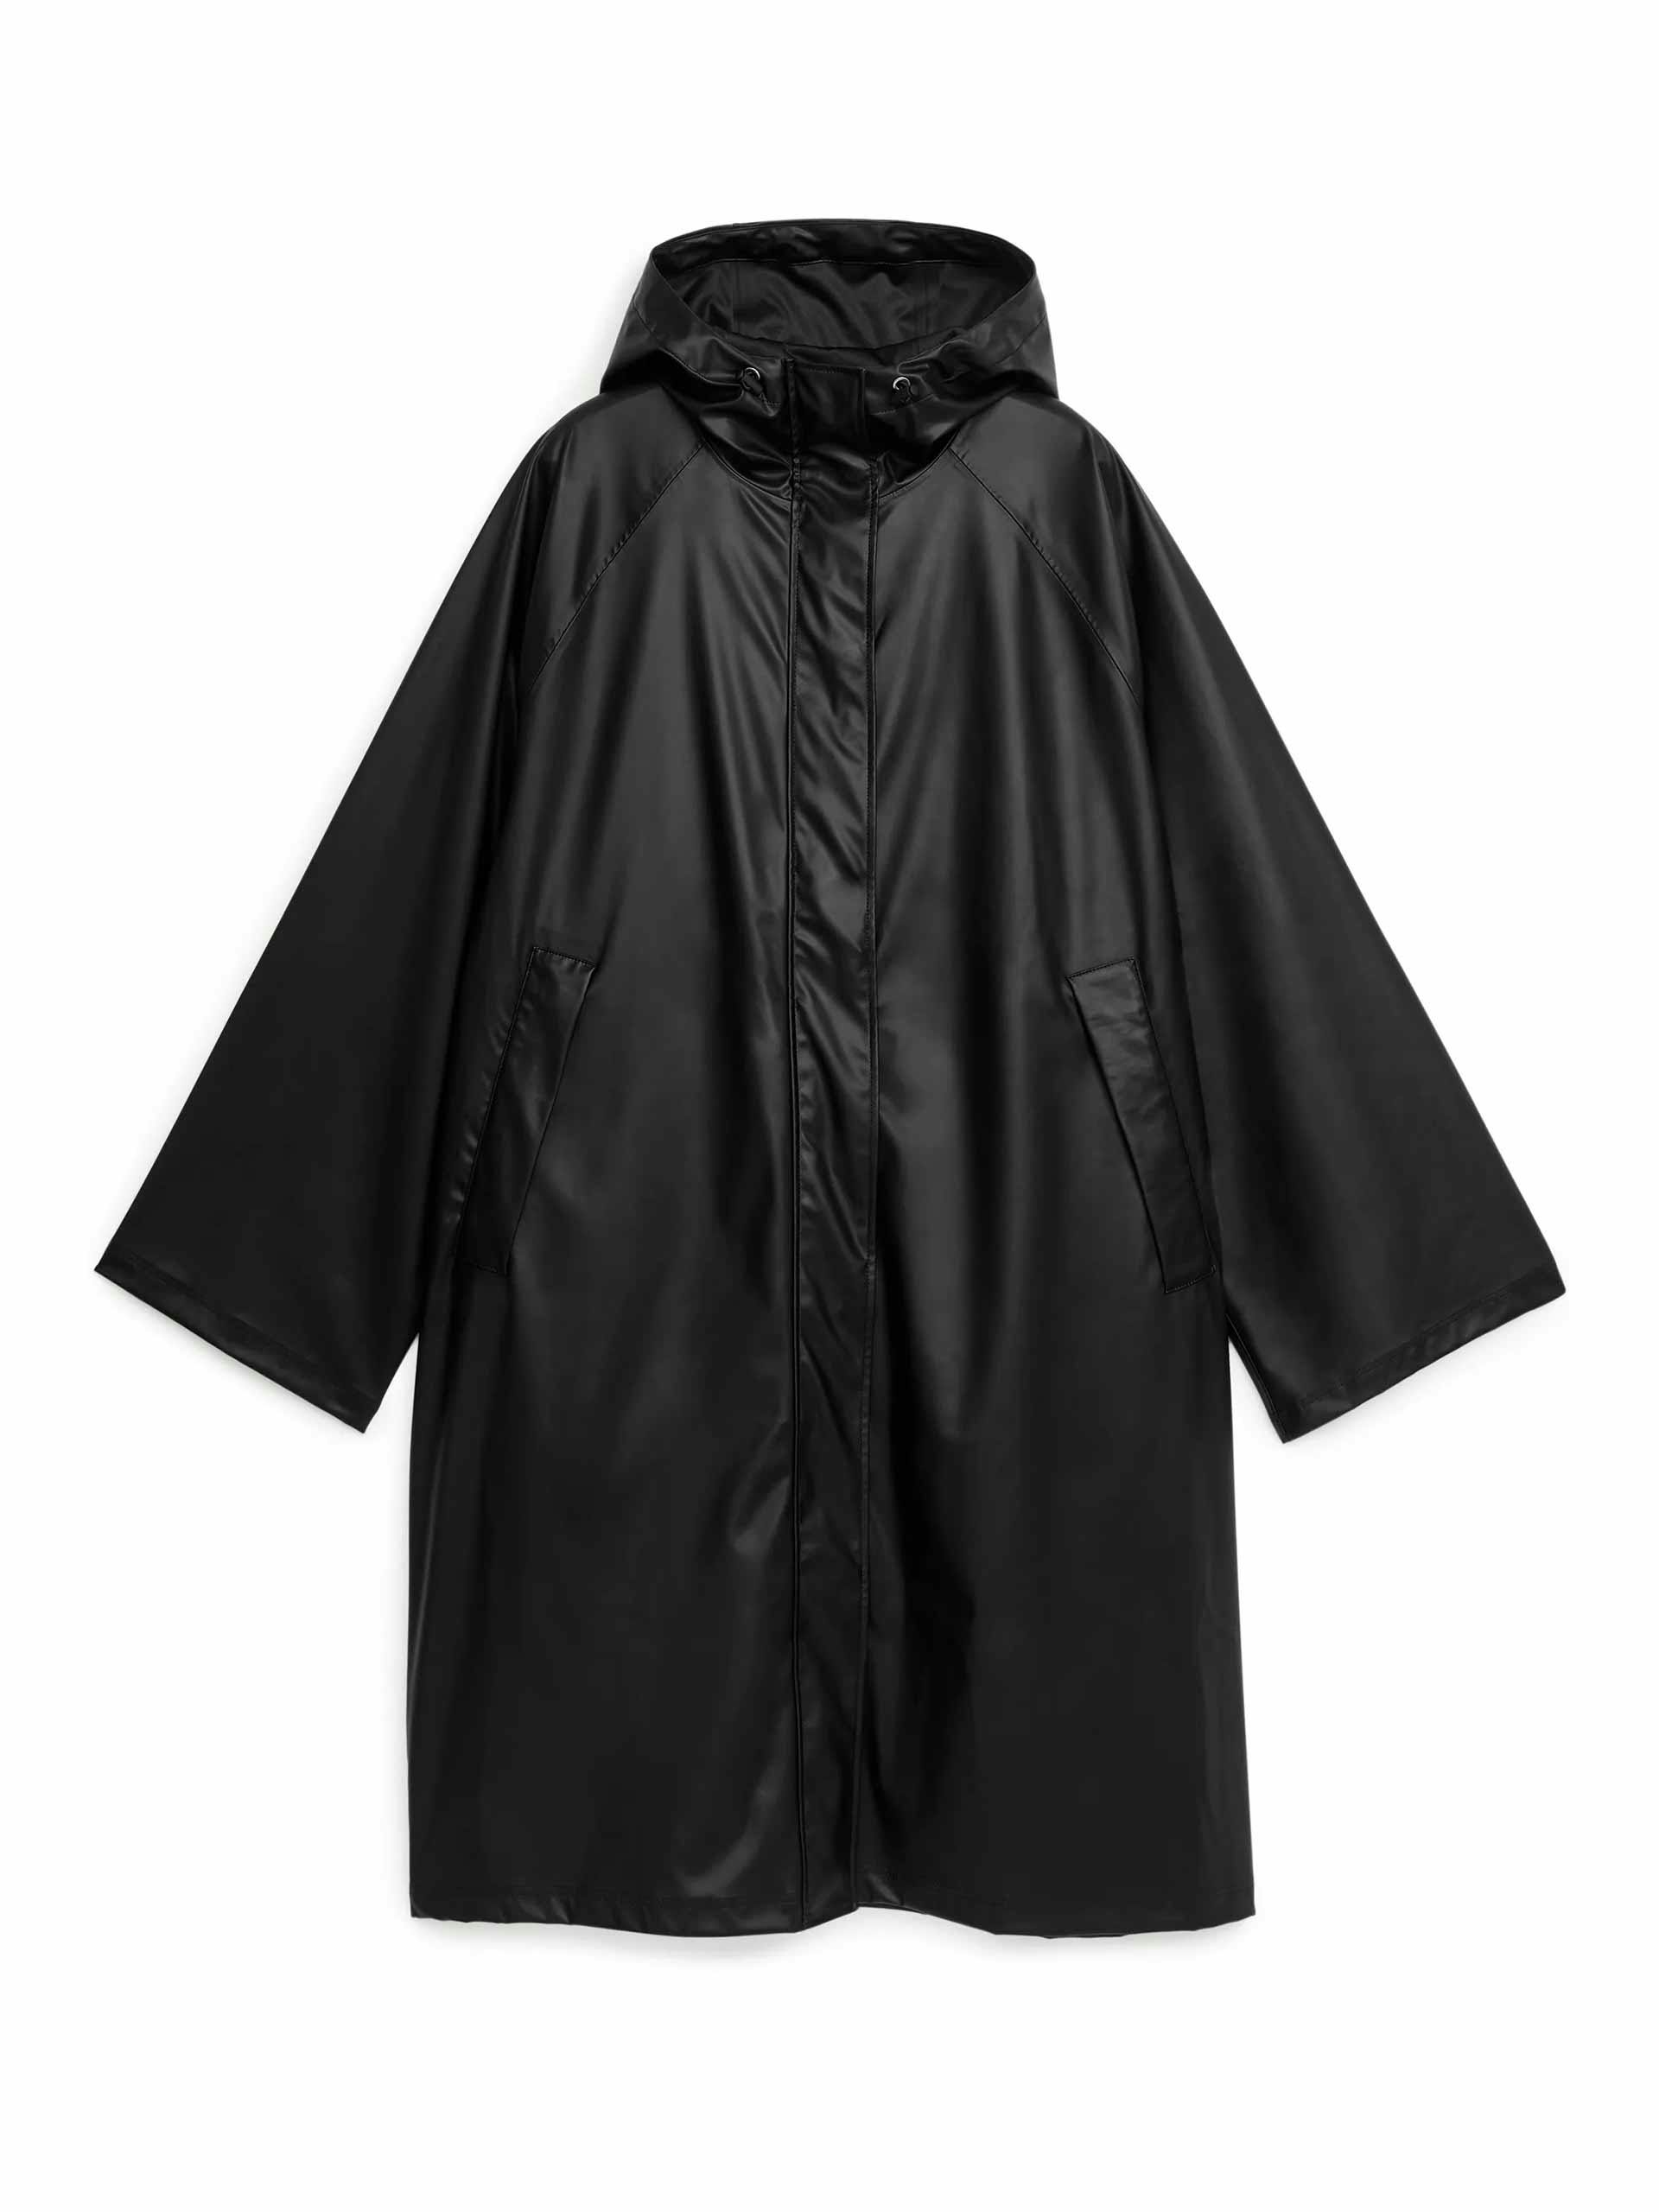 Hooded rain coat